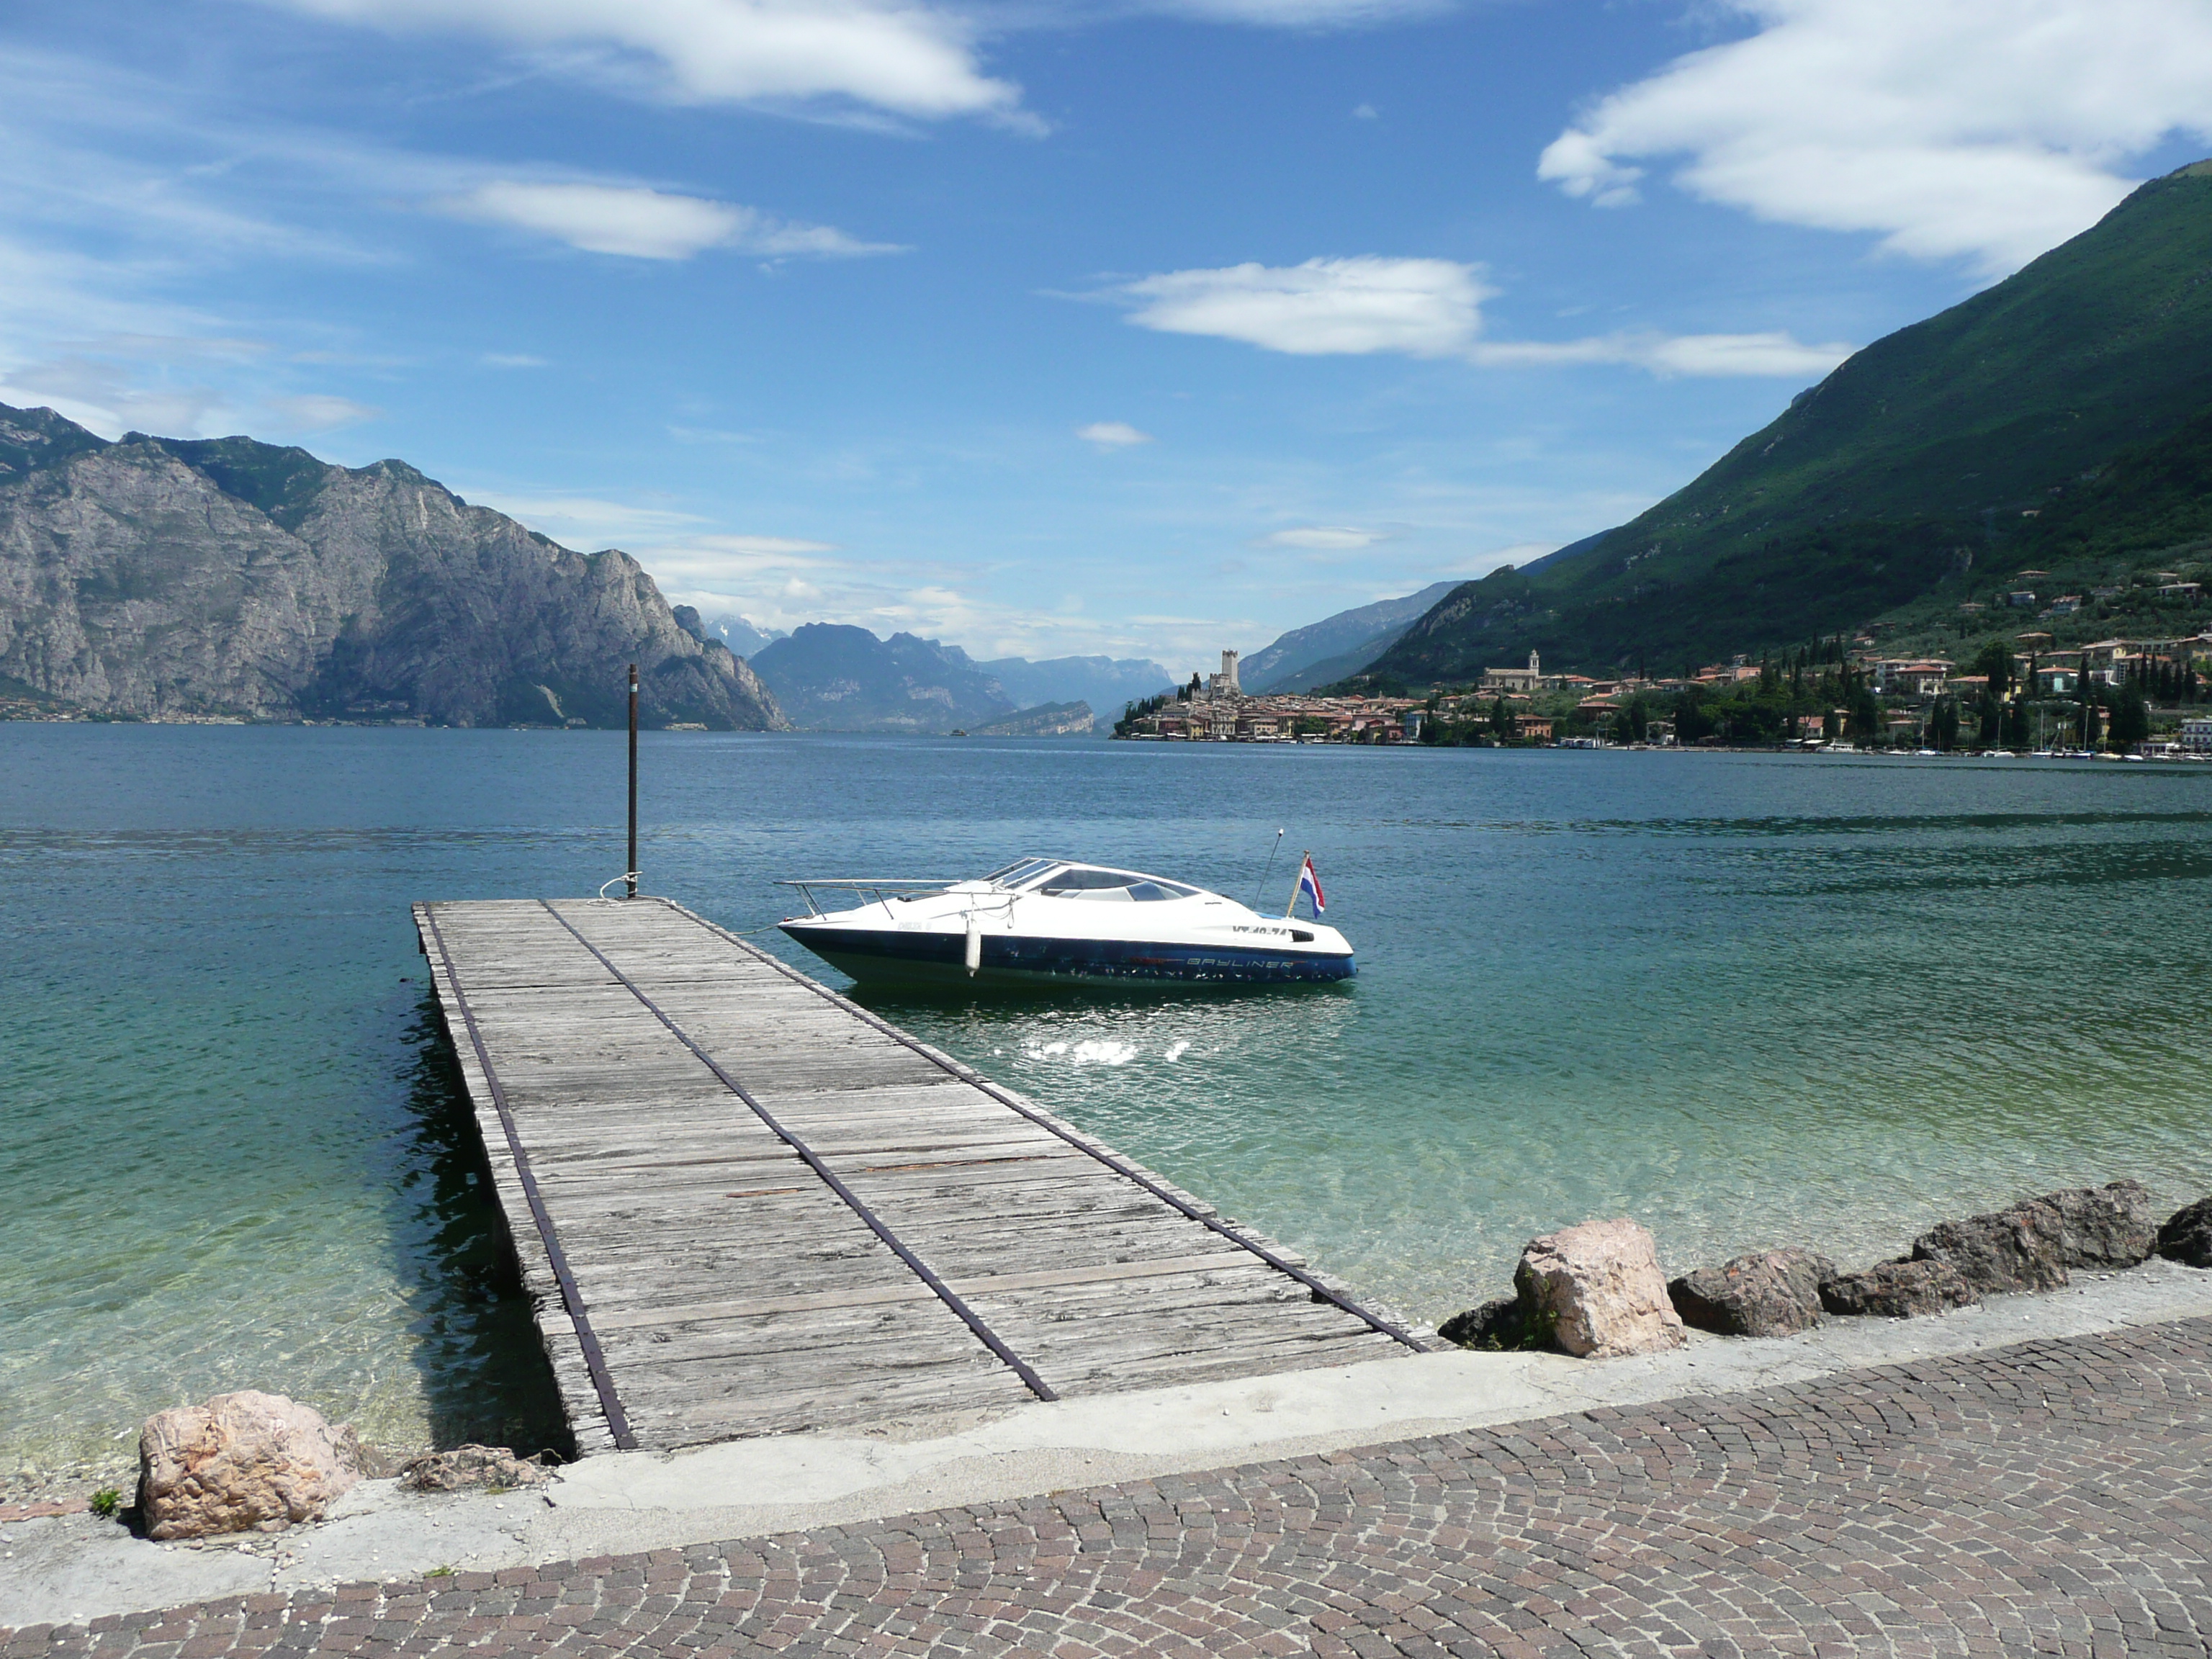 View of Malcesine across Lake Garda